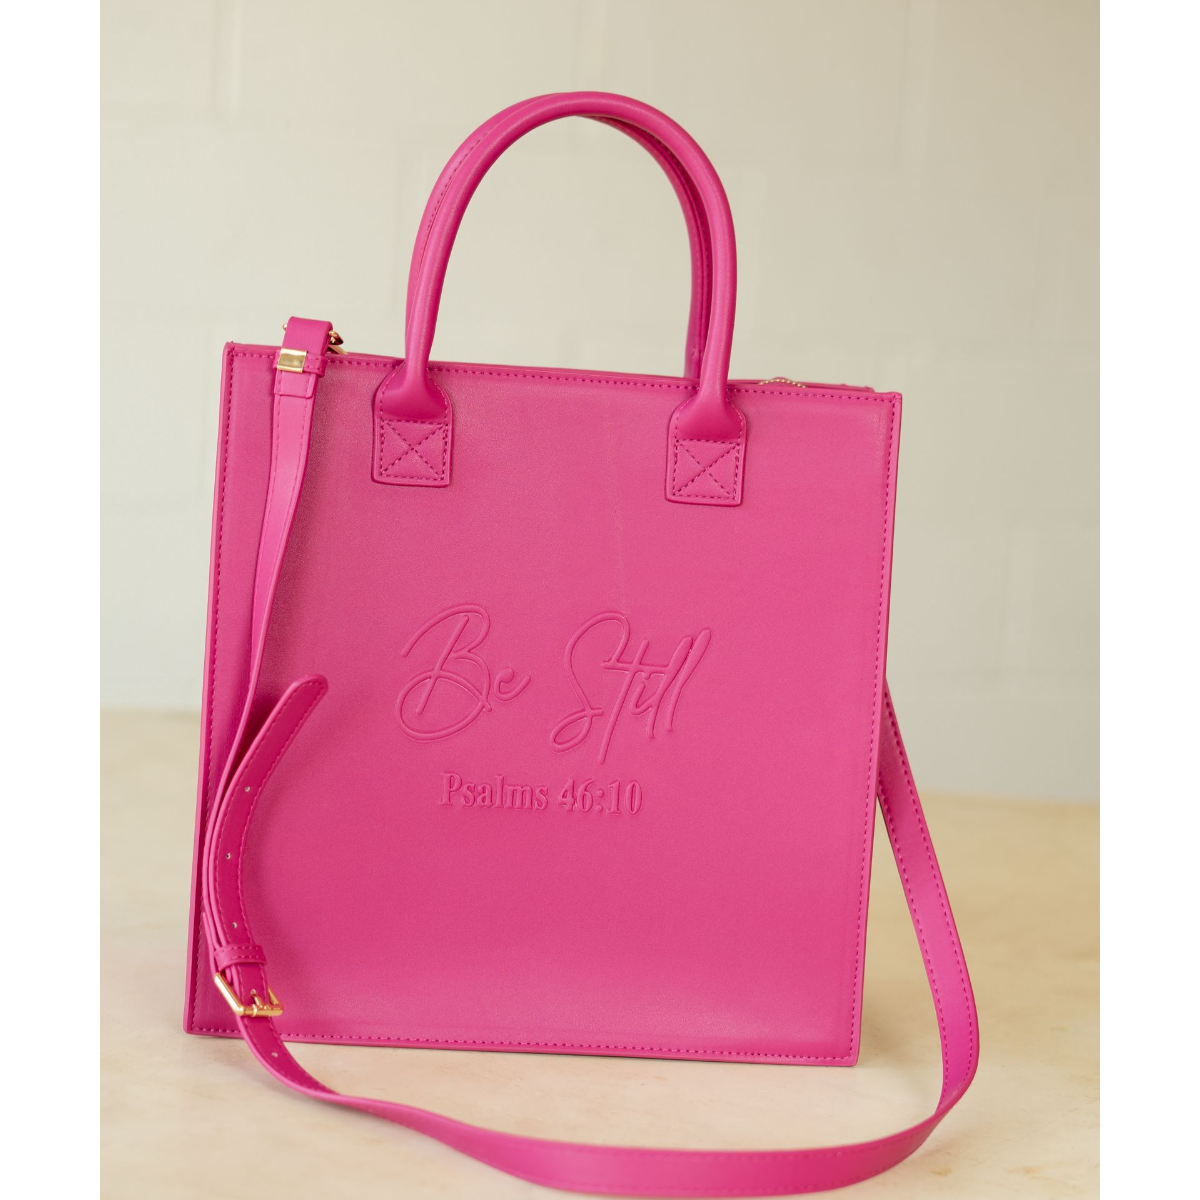 Pink Handbag - Buy Pink Handbag online in India